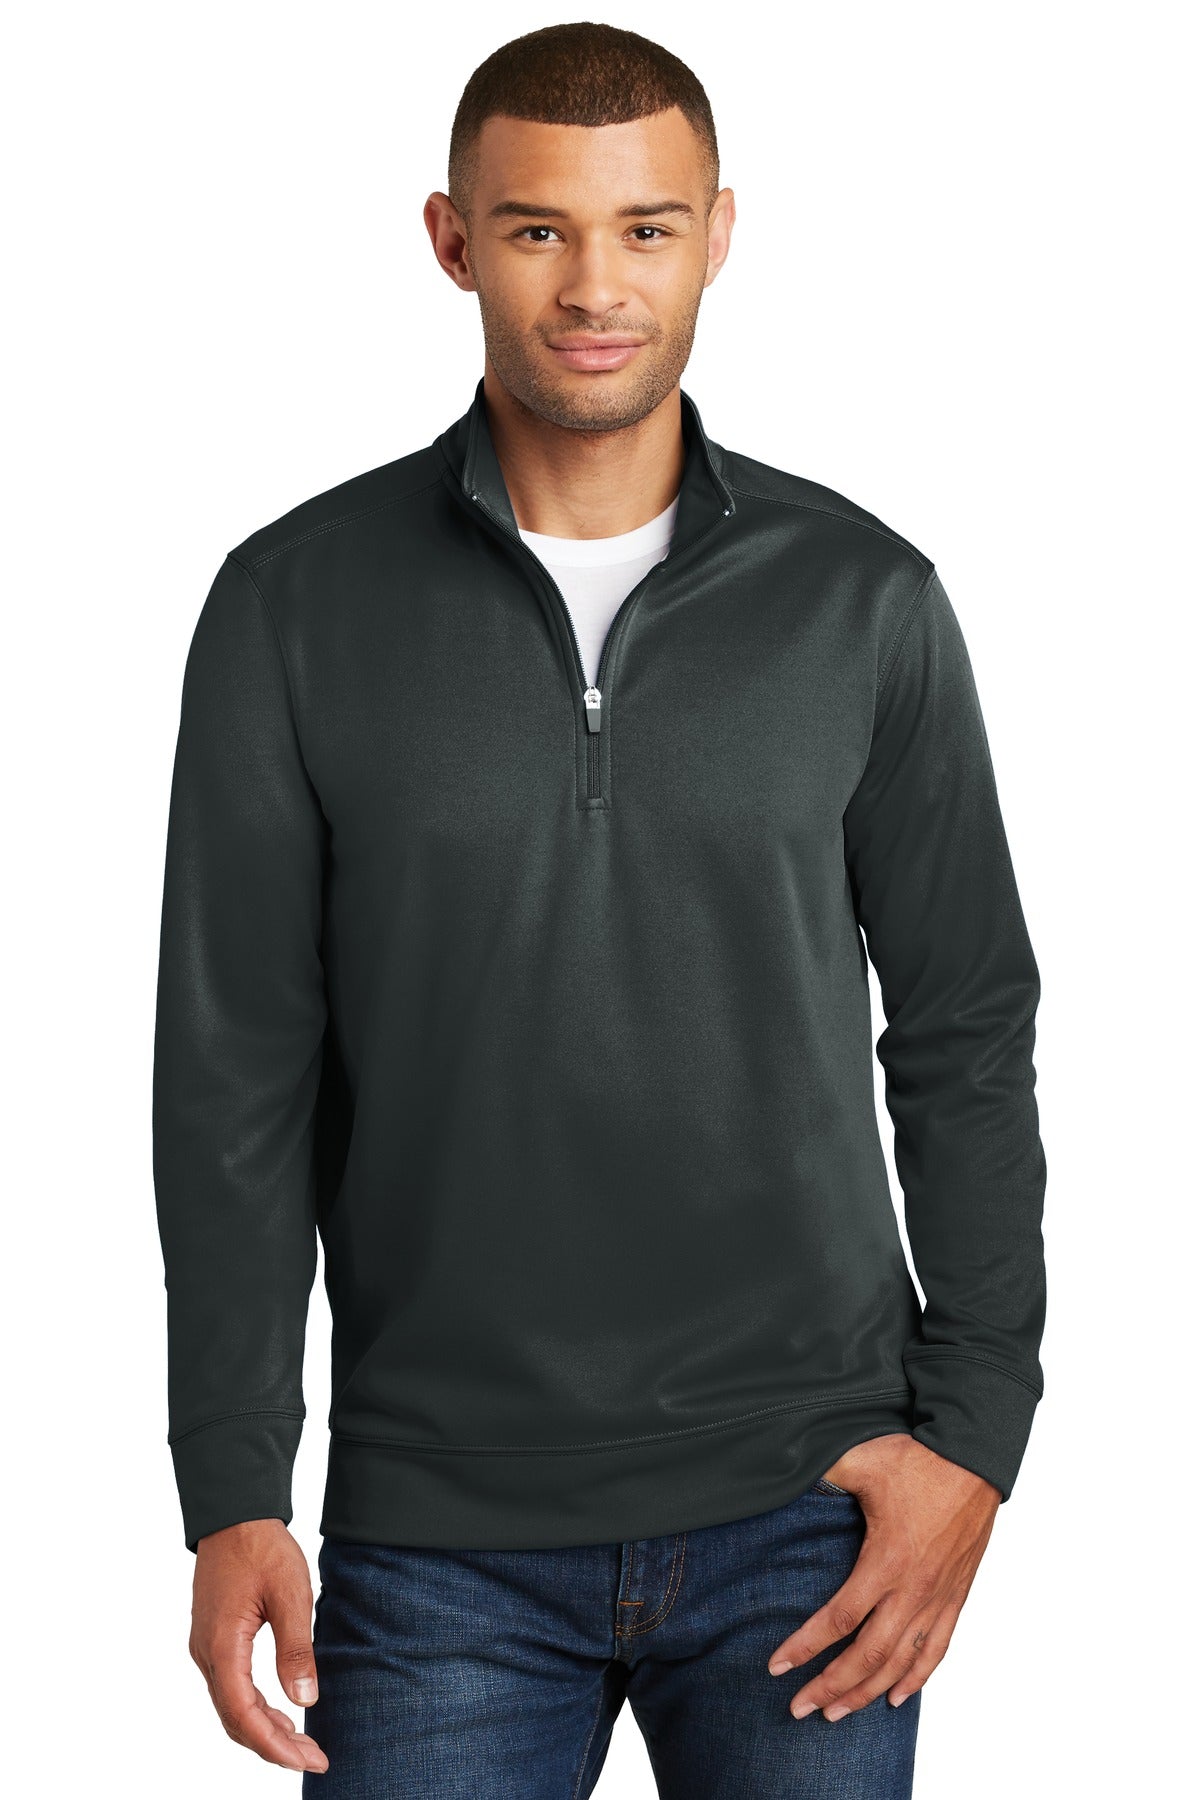 Sweatshirts/Fleece Jet Black Port & Company